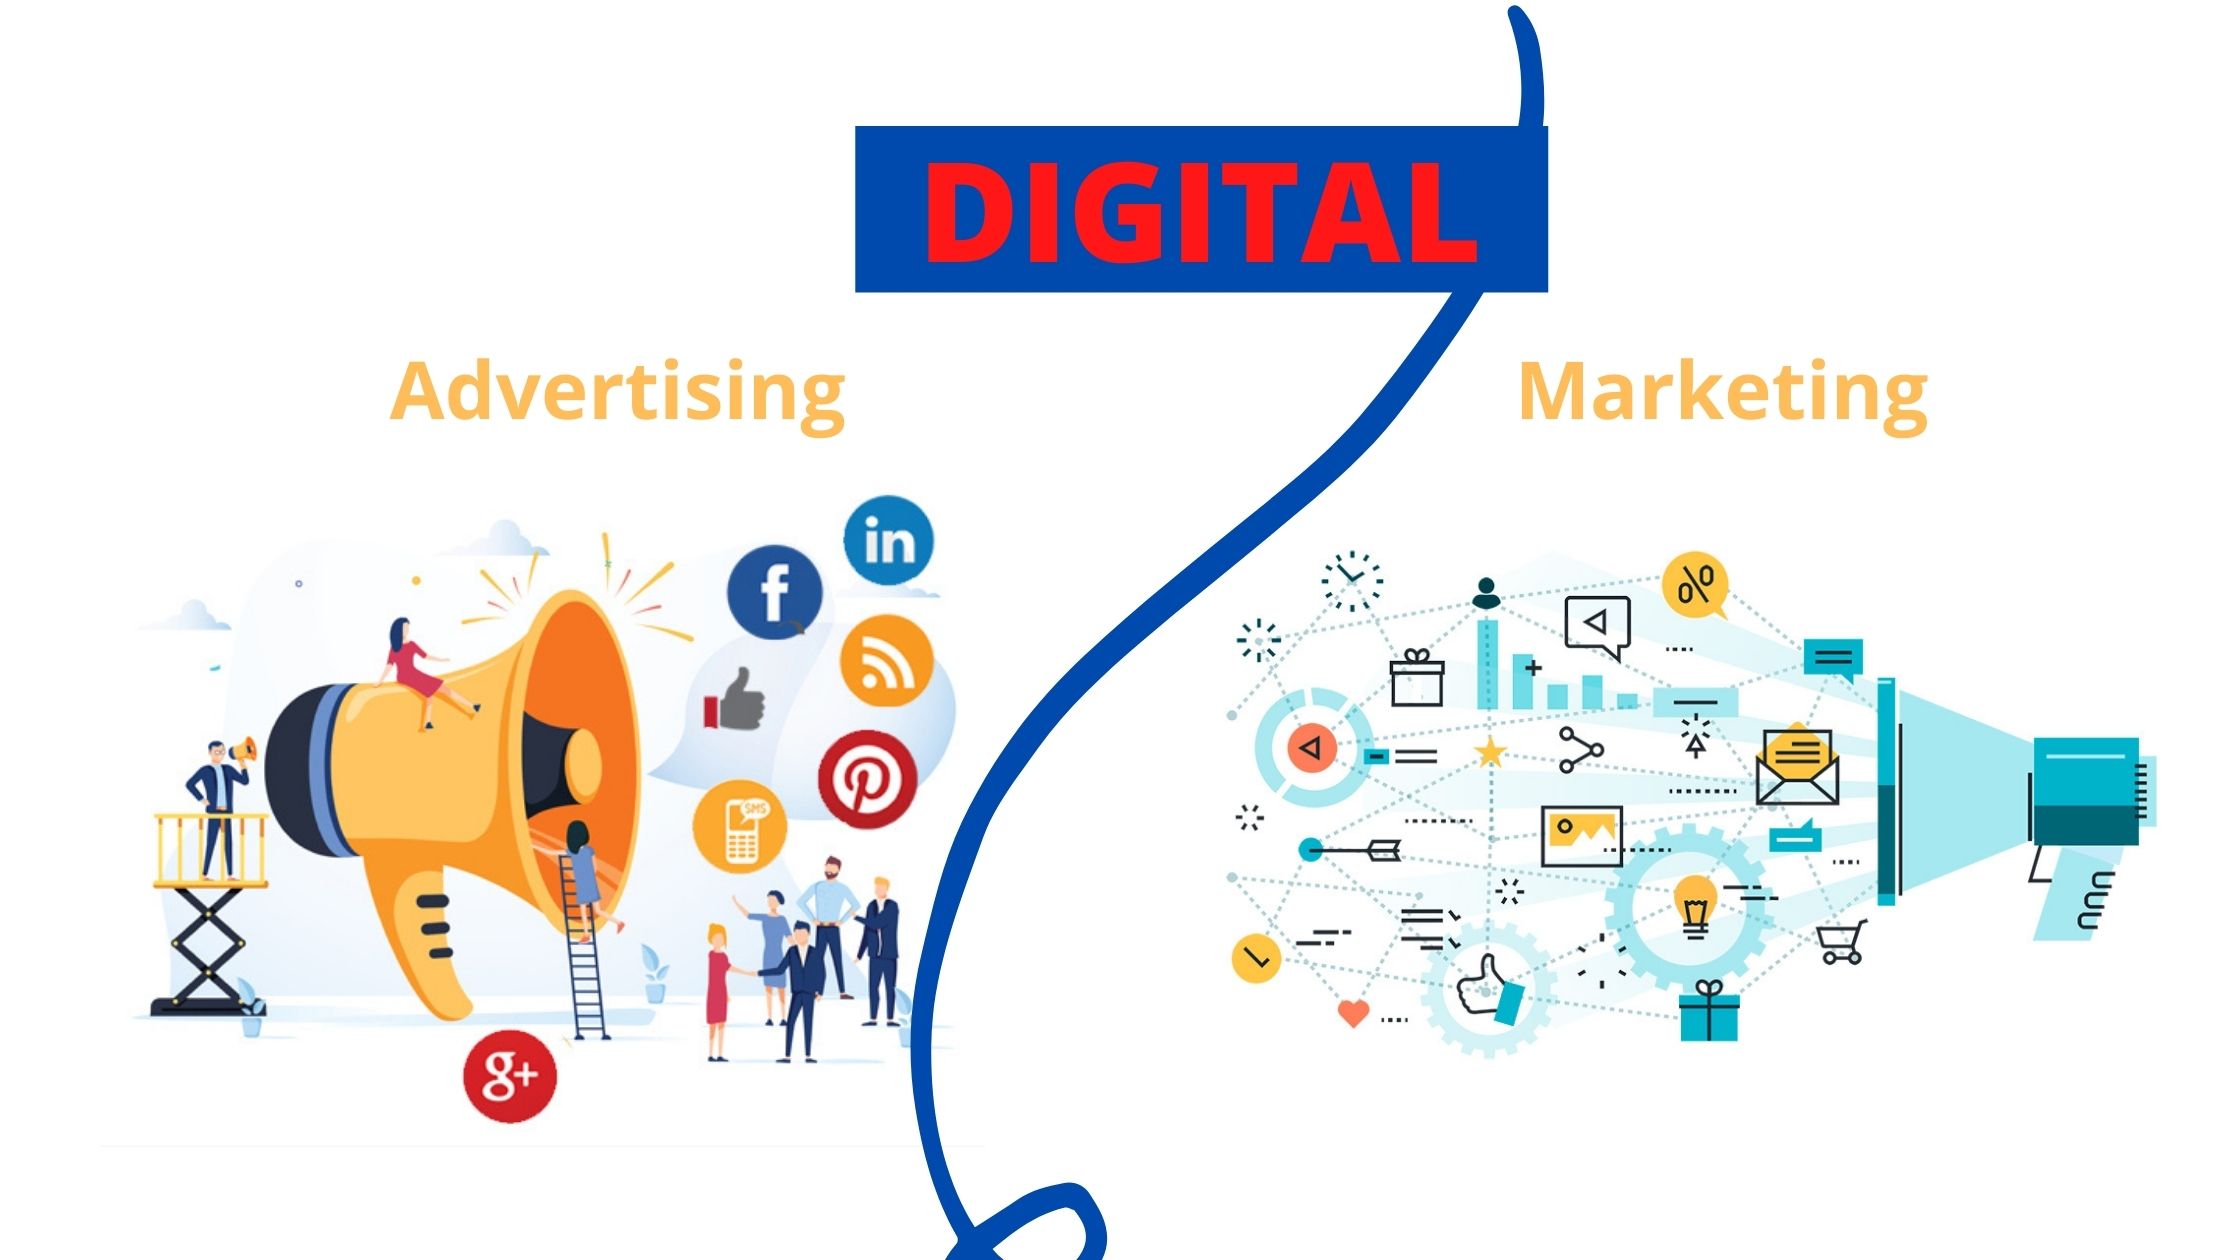 Advertising marketing is. Digital реклама. Цифровой маркетинг против. Реклама vs маркетинг. Диджитал реклама.